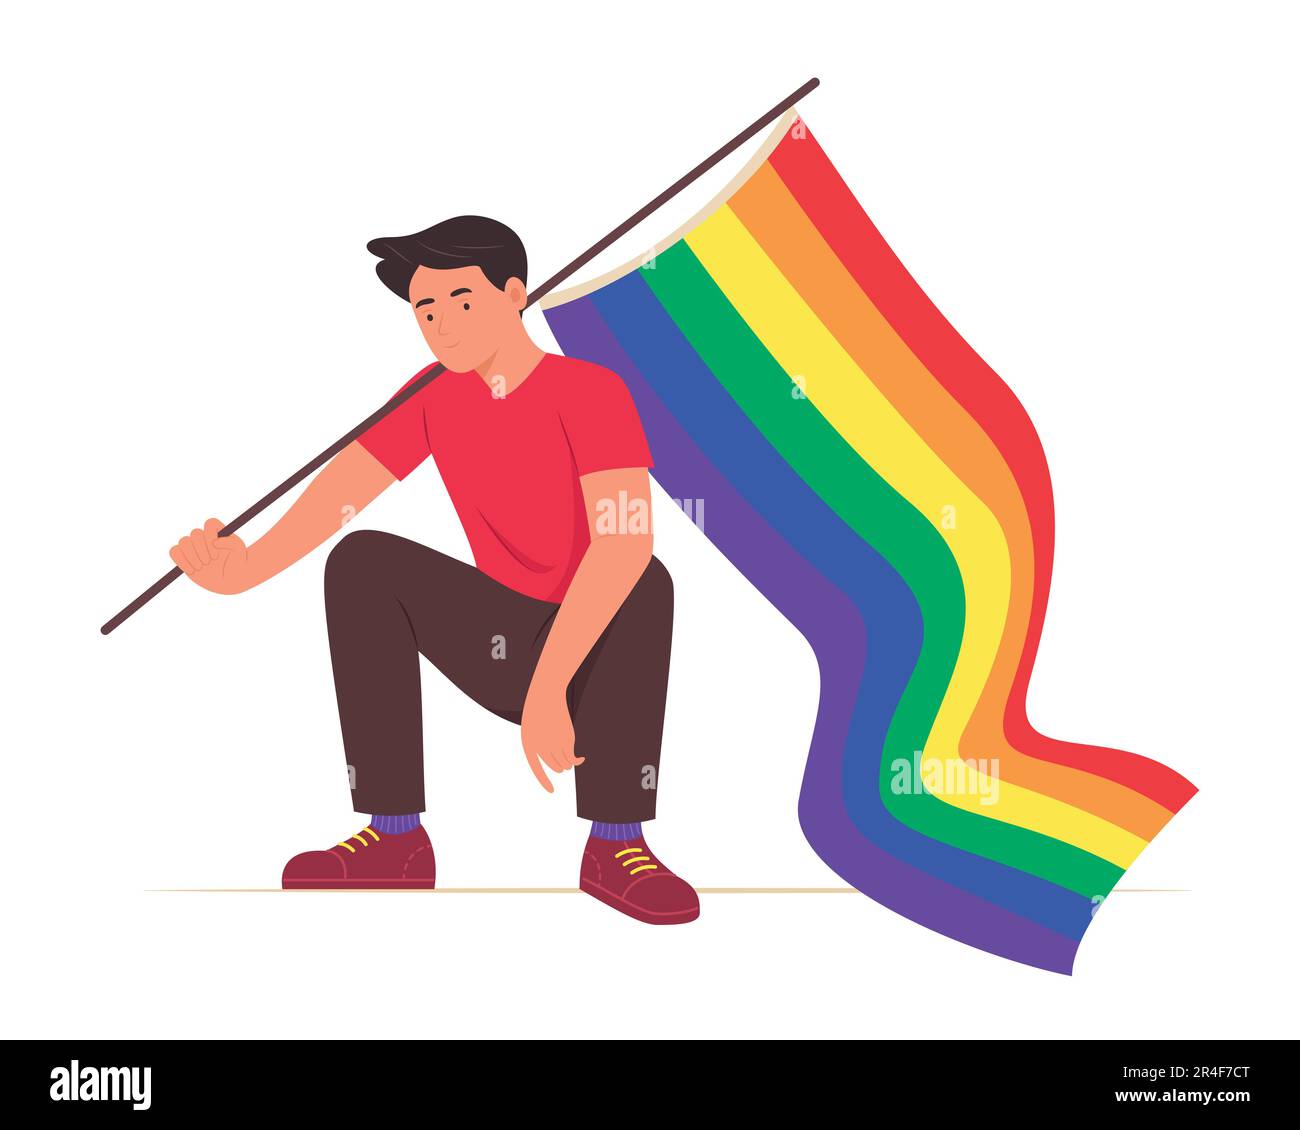 Gay Man Holding LGBT Rainbow Flag for Gay Pride Celebration Concept Illustration Stock Vector